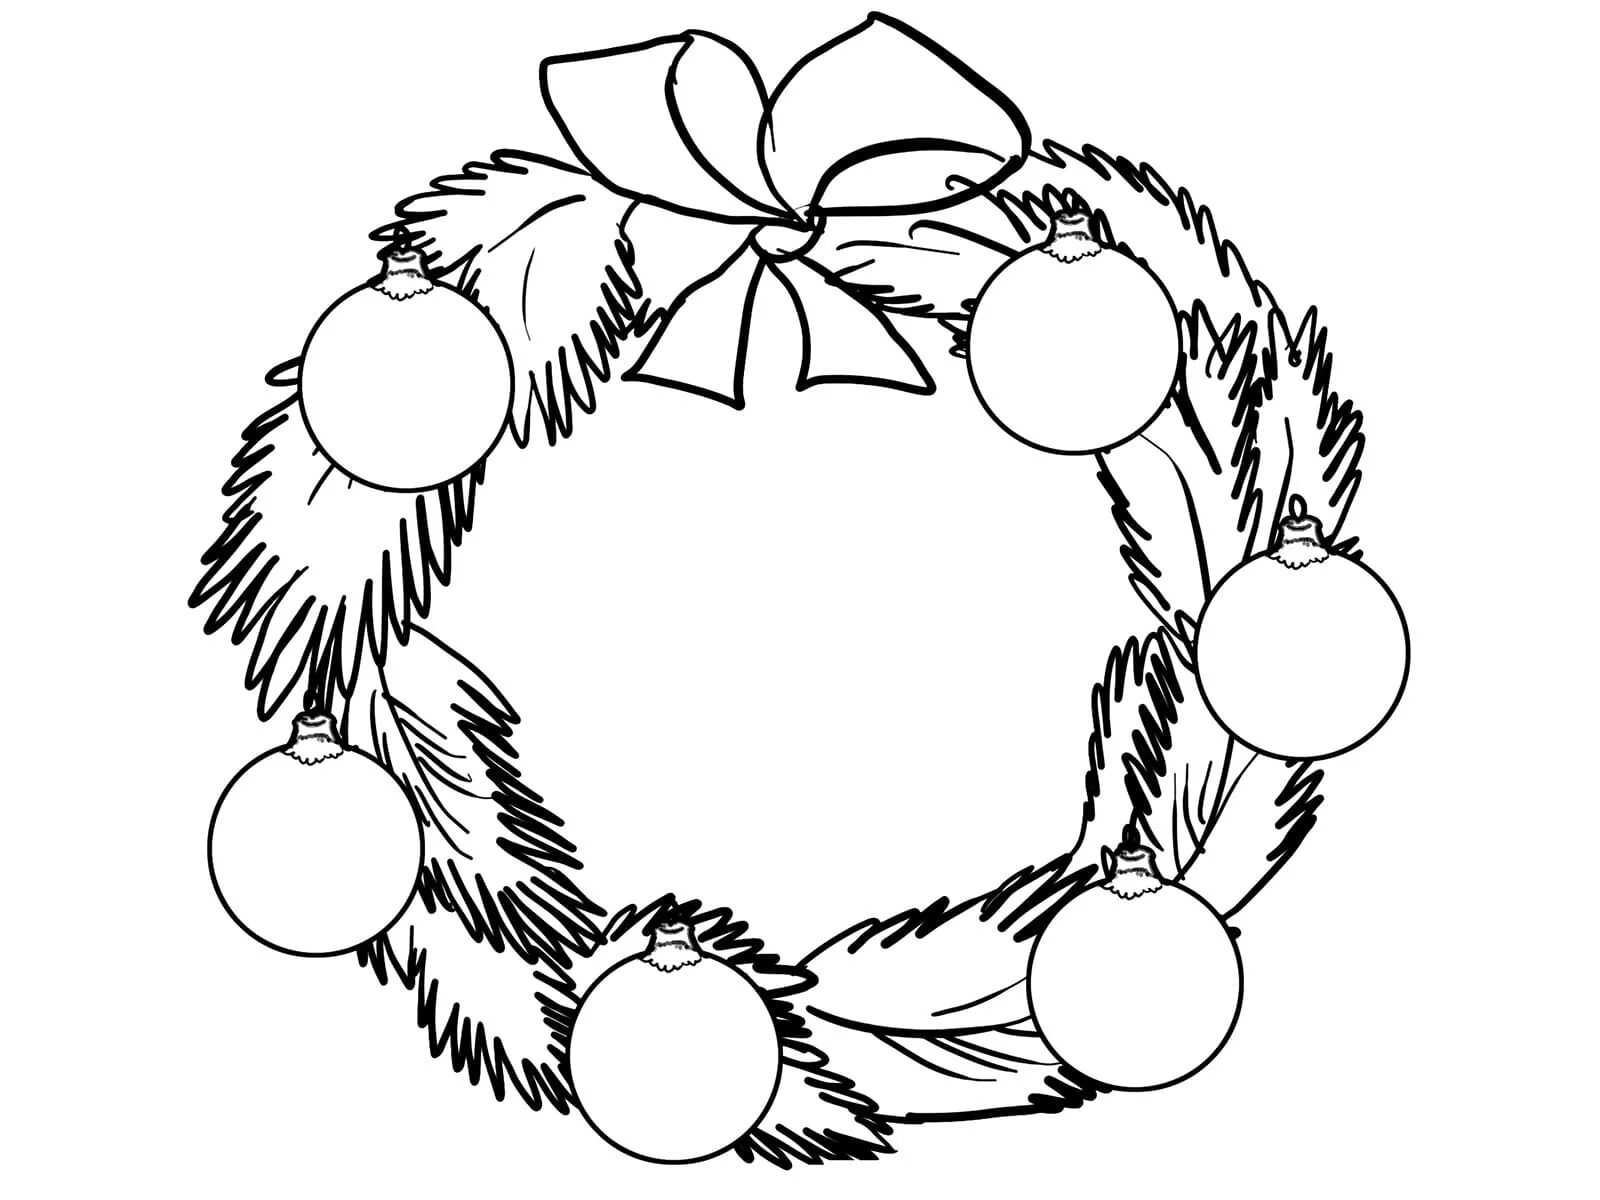 Children's Christmas wreath #8